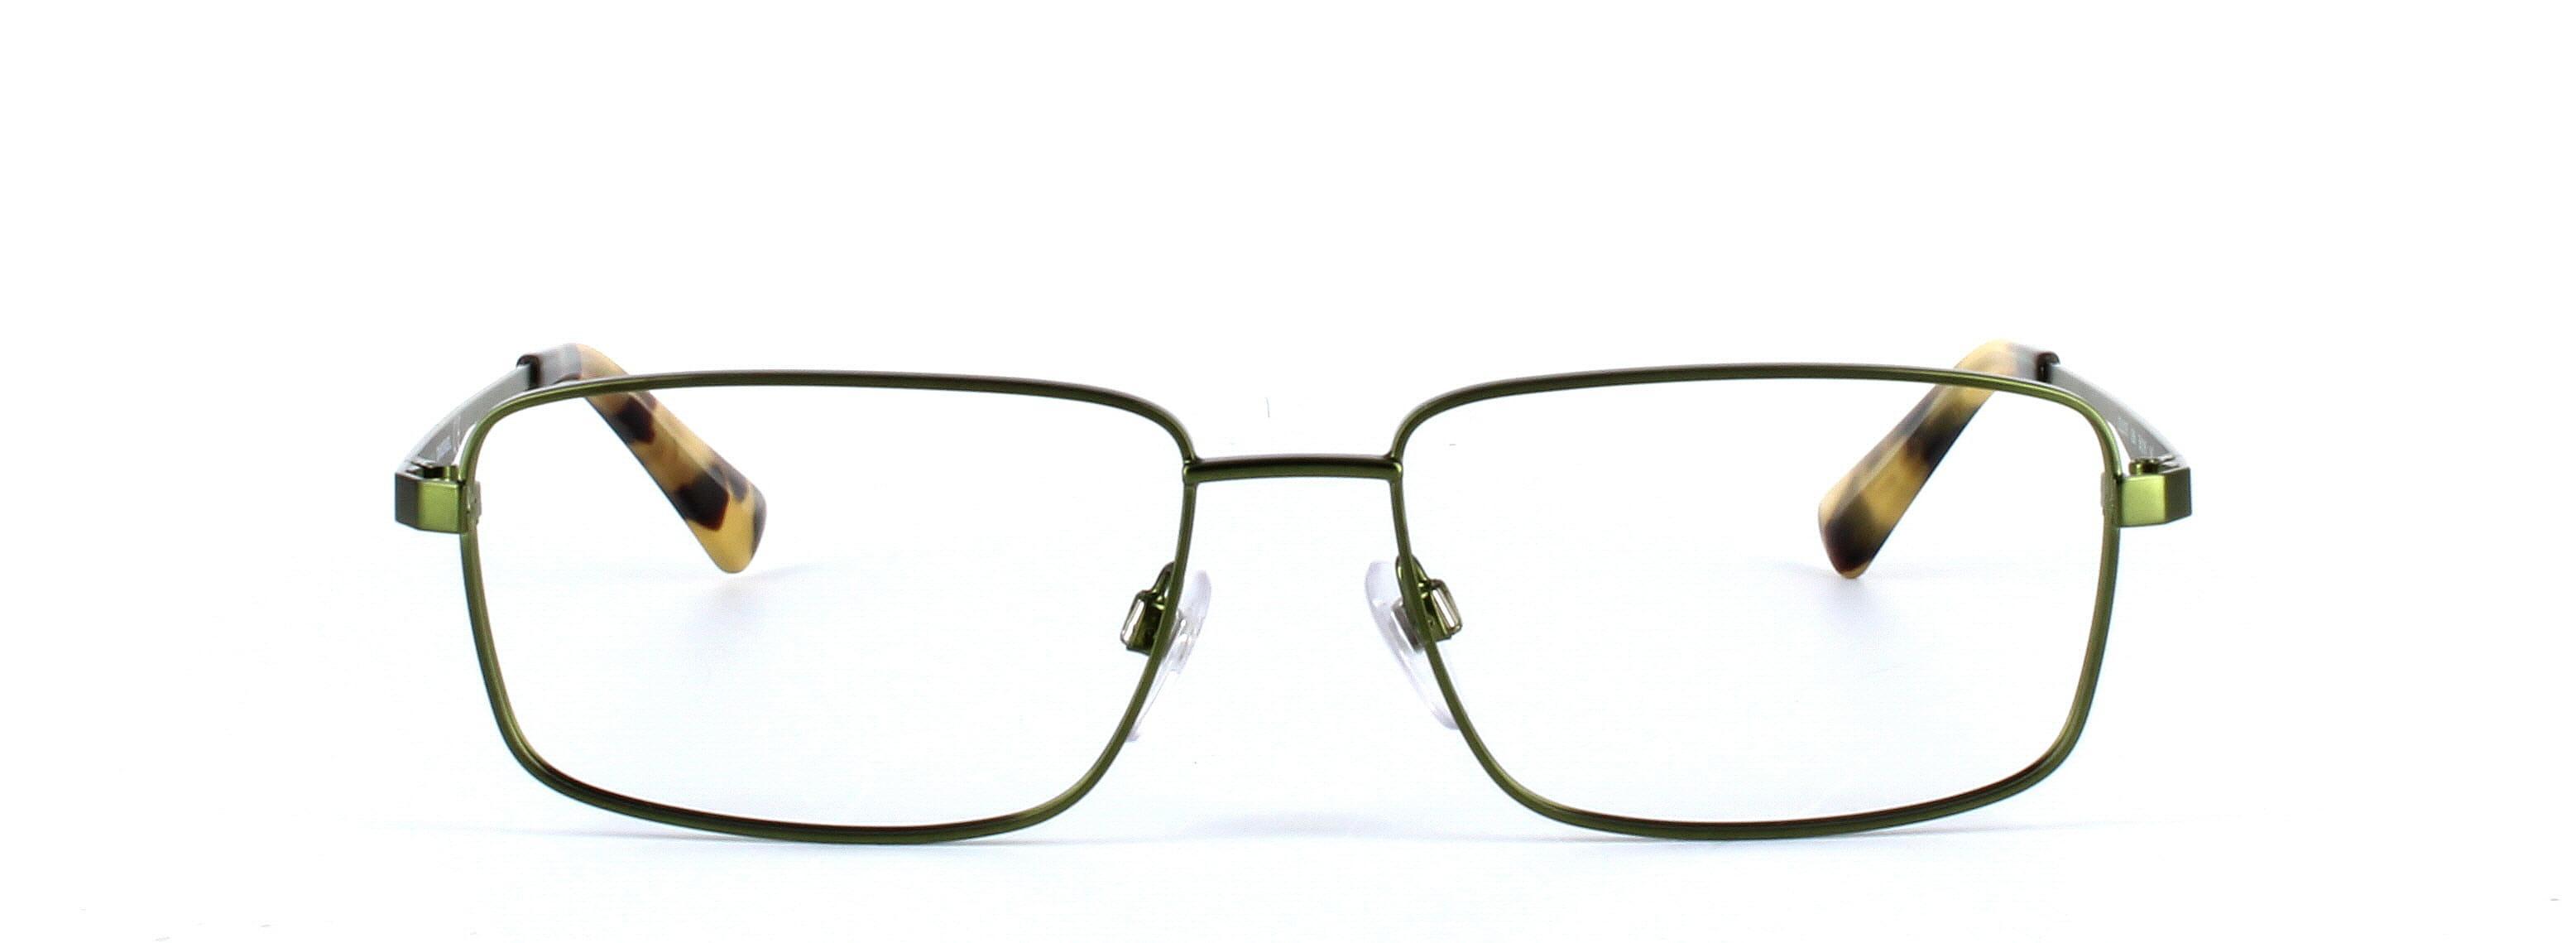 Diesel (DL5375-096) Olive Green Full Rim Rectangular Metal Glasses - Image View 5